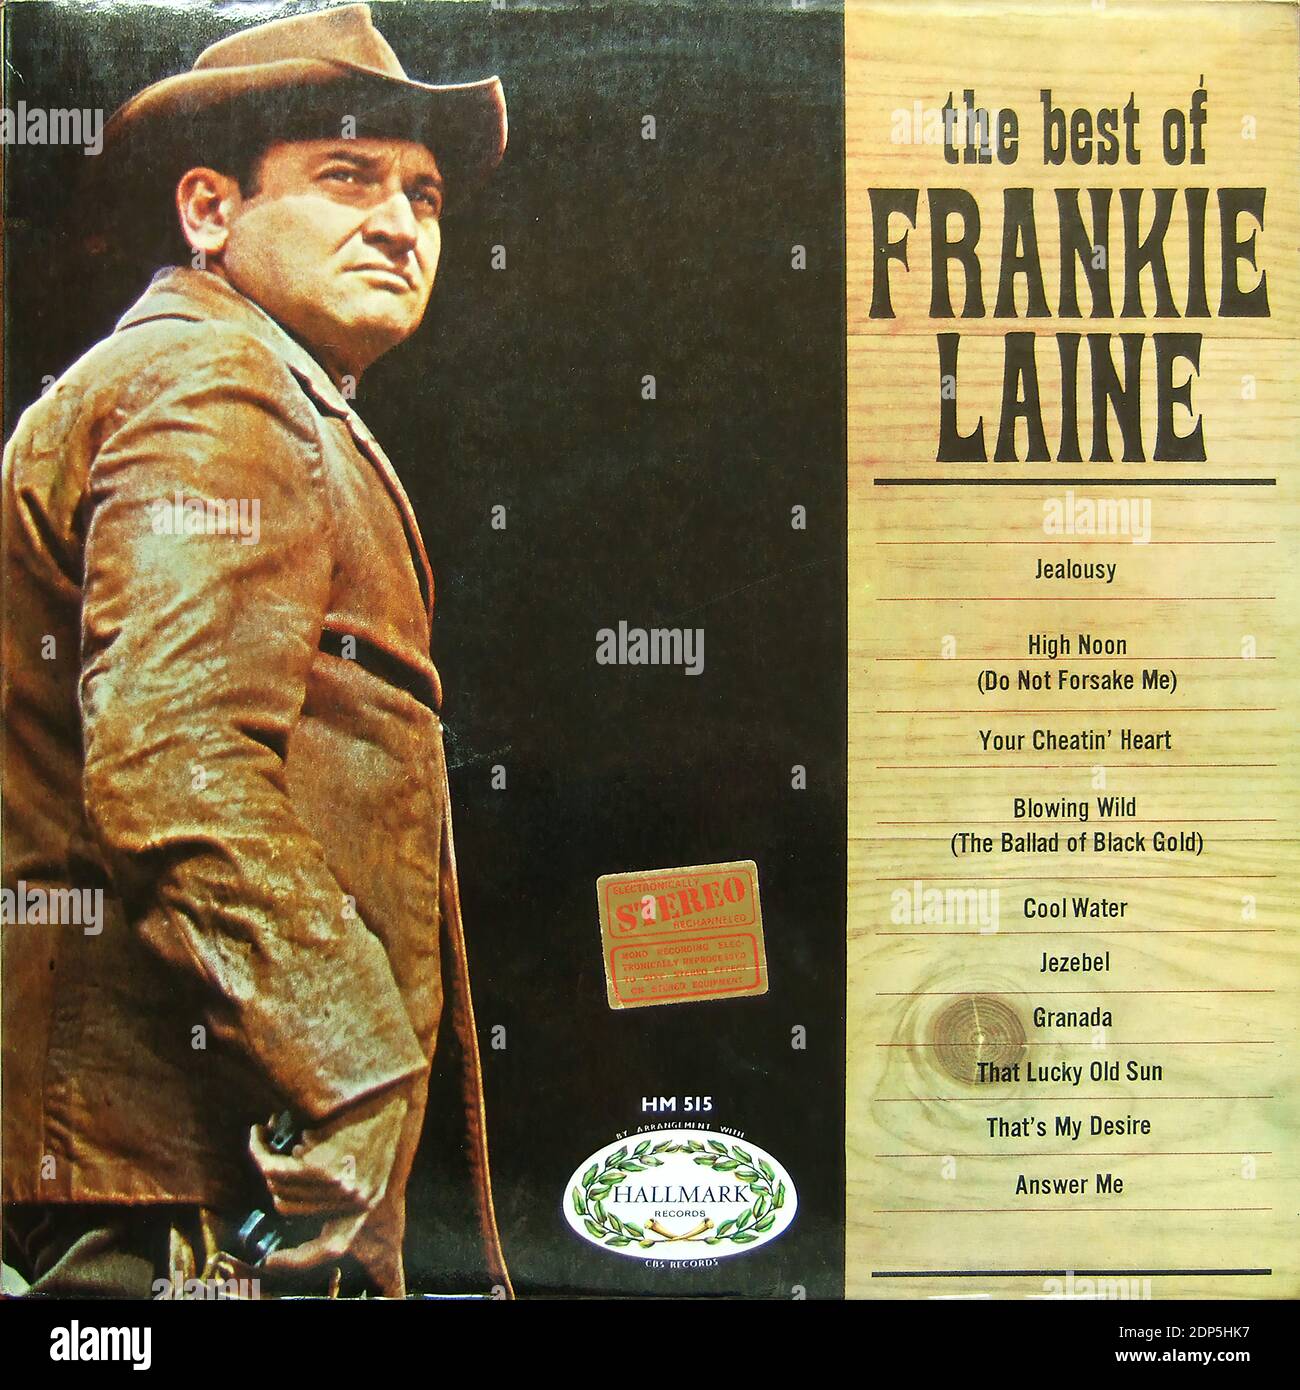 The Best Of Frankie Laine, Hallmark HM 515 - Vintage vinyl album cover Stock Photo